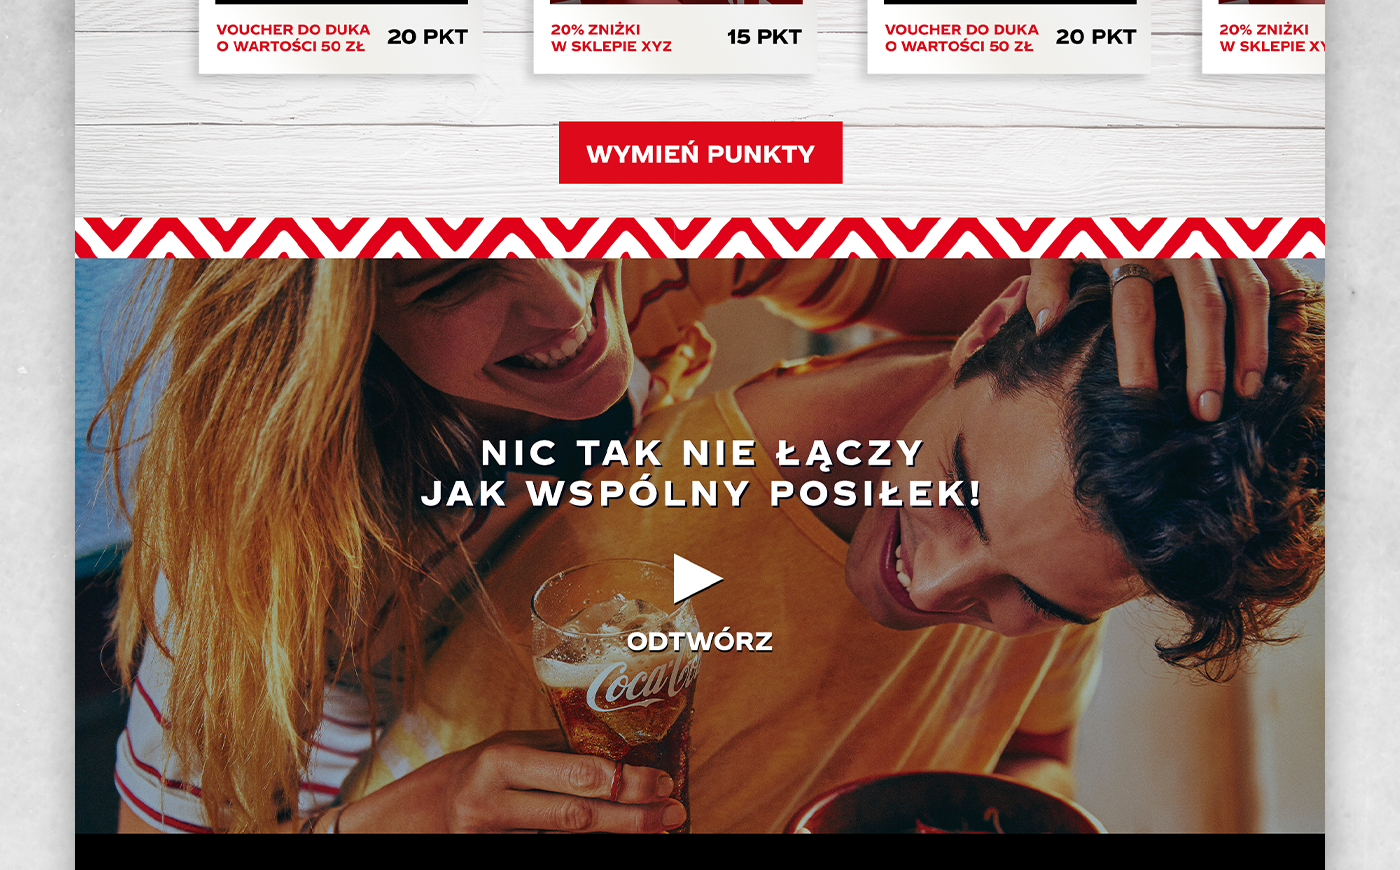 Coca-Cola cocacola Website landingpage Lottery www